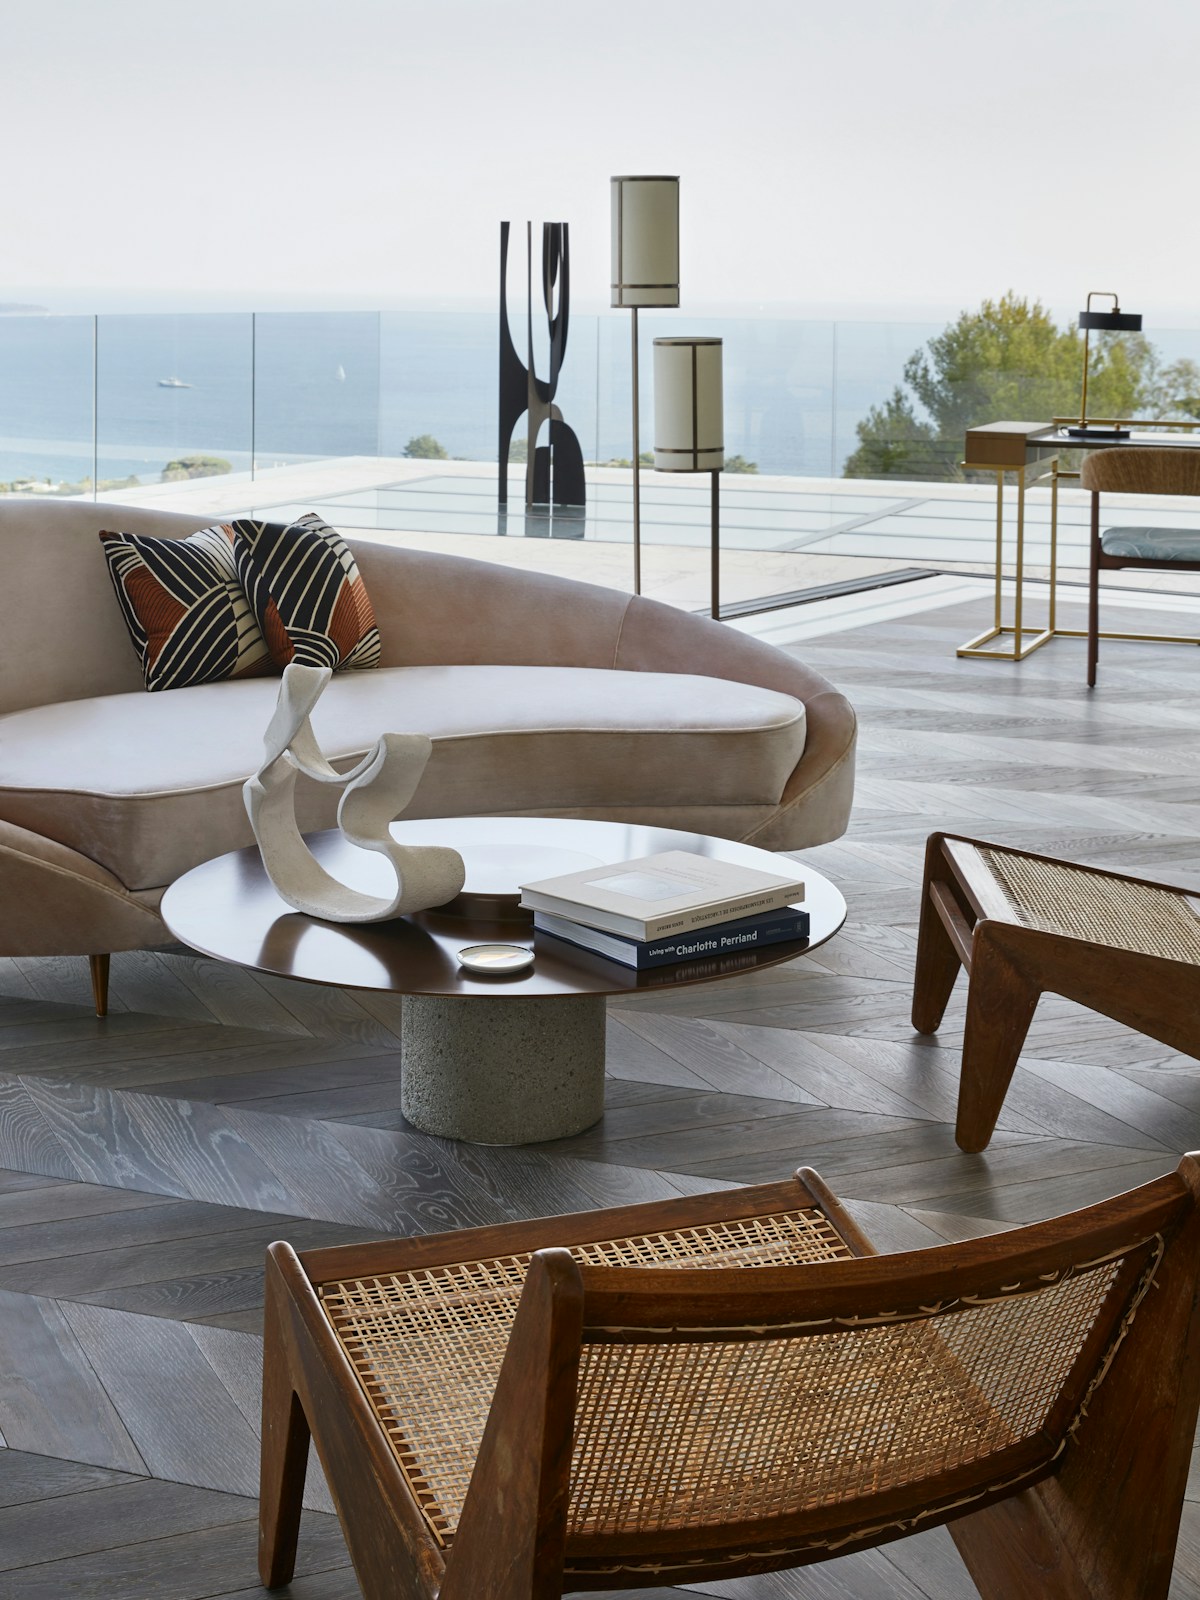 Humbert & Poyet Villa Odaya Mid-century Modern style curved cream sofa and rattanlounge chair